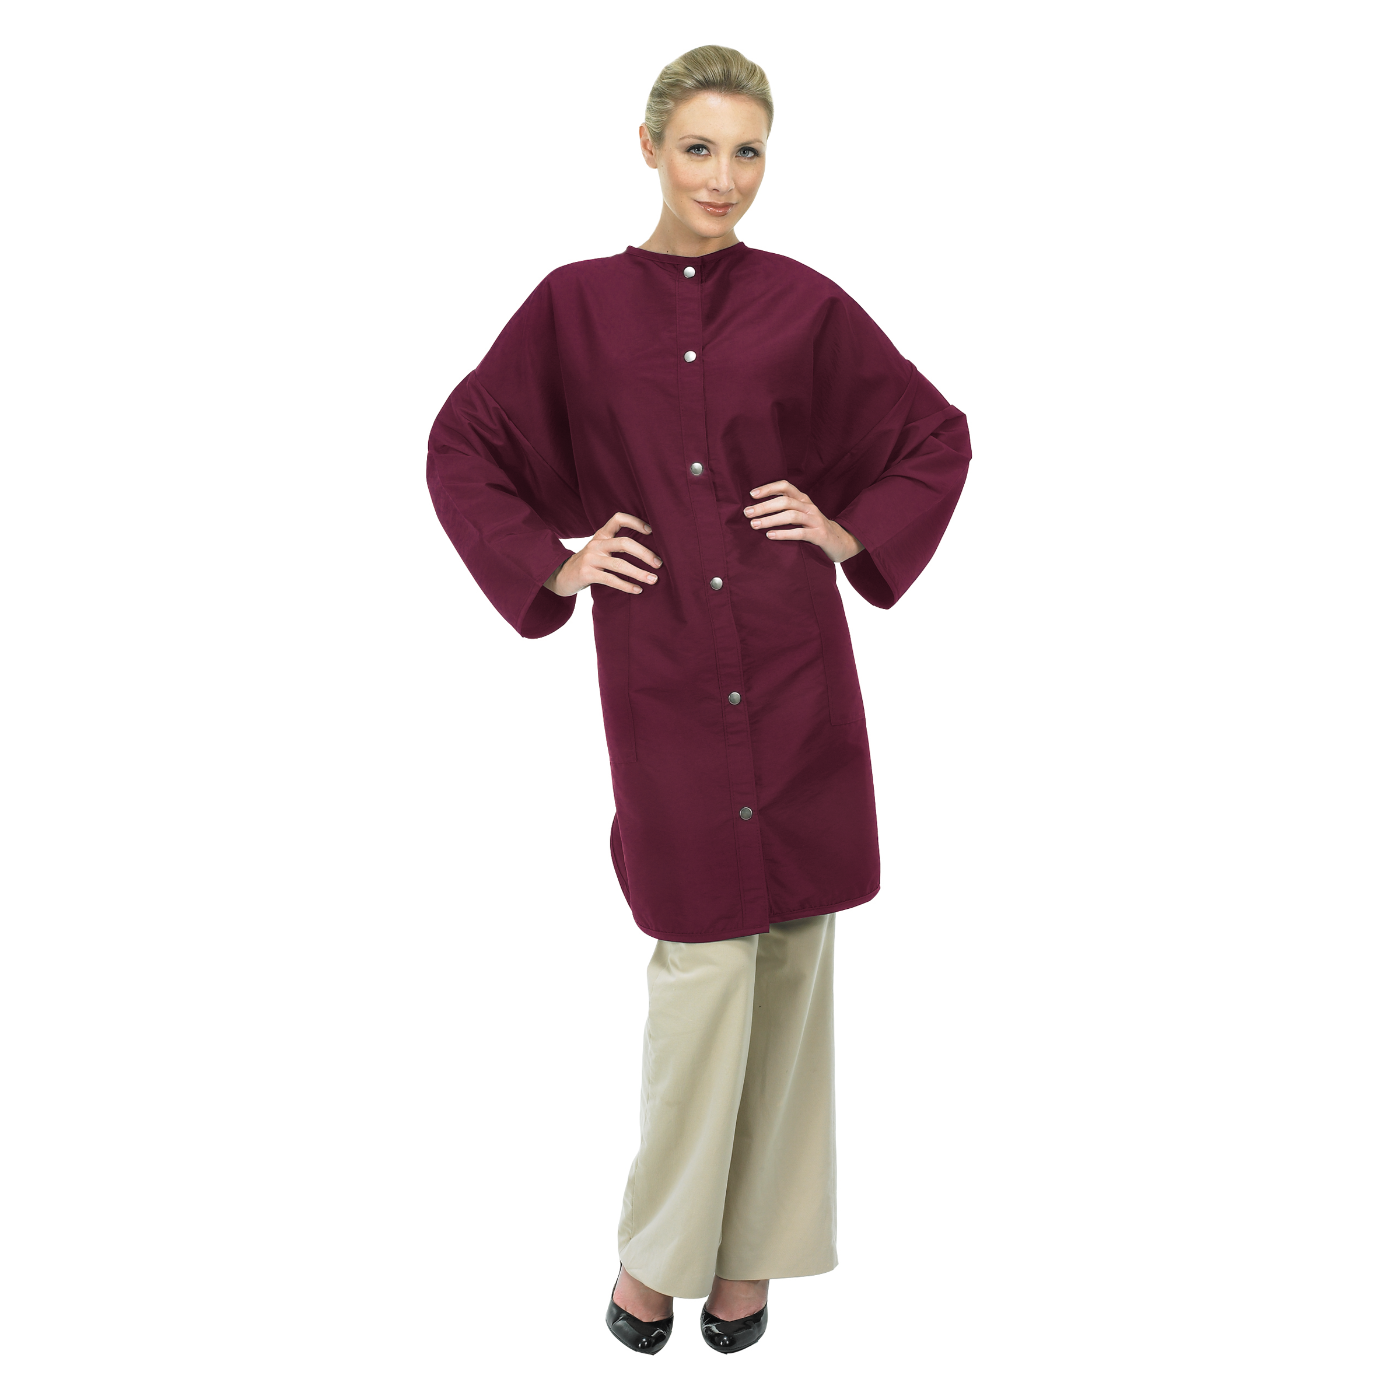 Big Shirts Crinkle Nylon Uniforms - Burgundy